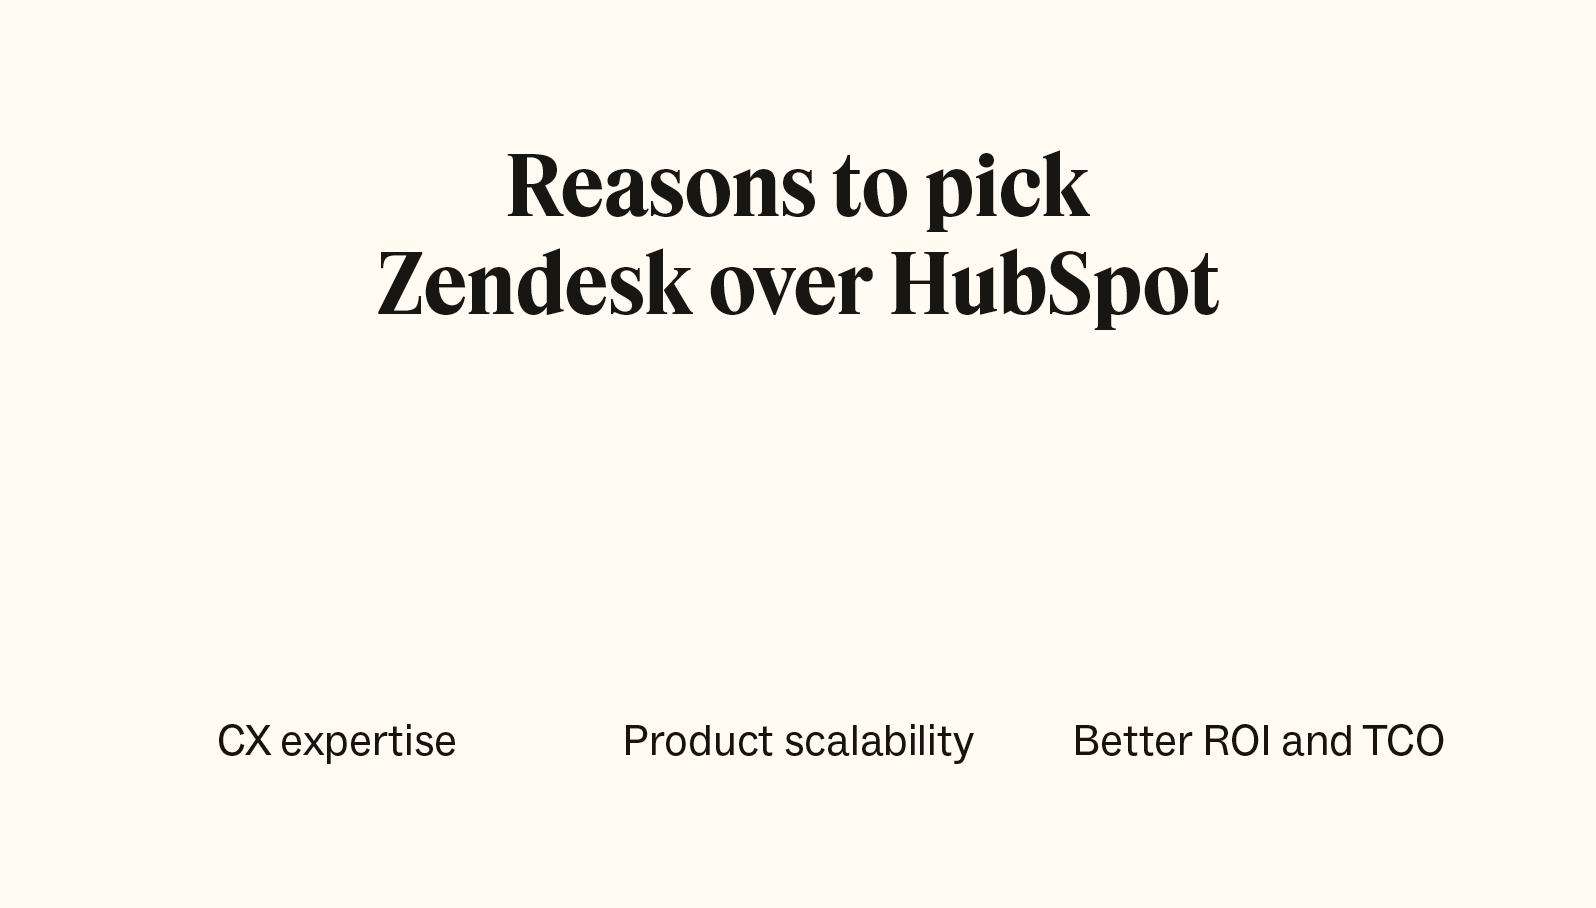 Reasons to pick Zendesk over HubSpot